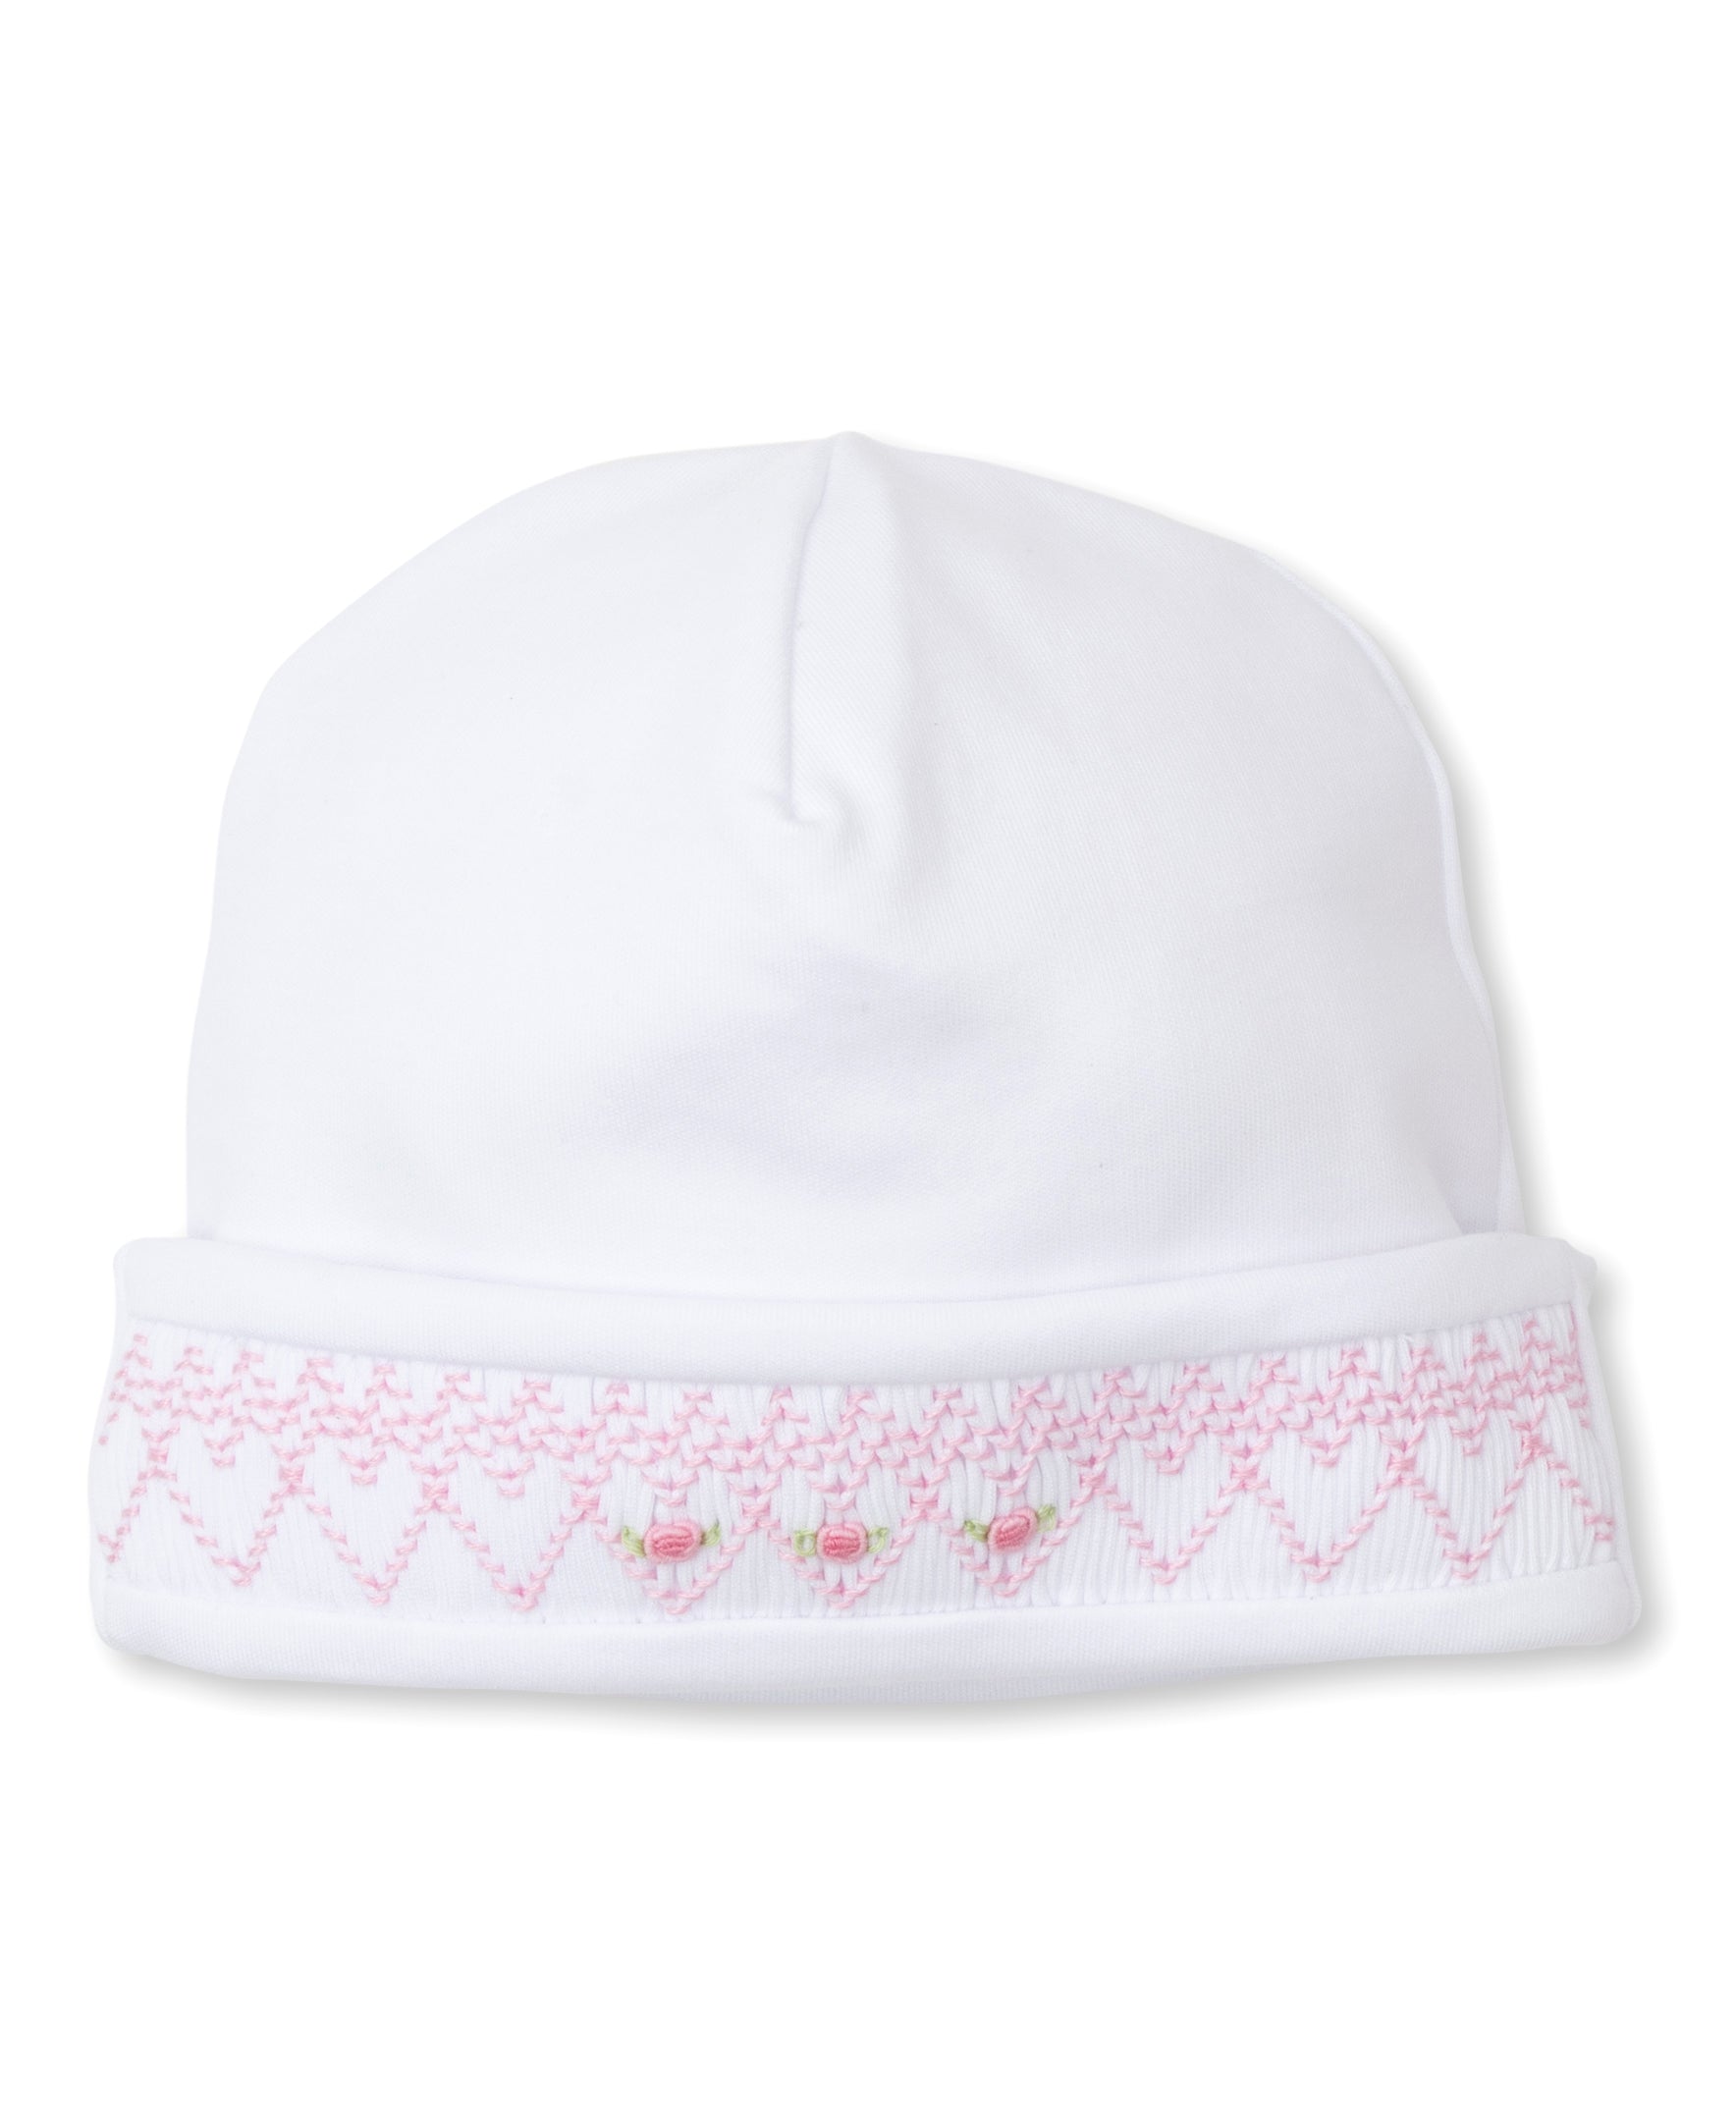 CLB Summer Bishop 24 White/Pink Hand Smocked Hat - Kissy Kissy